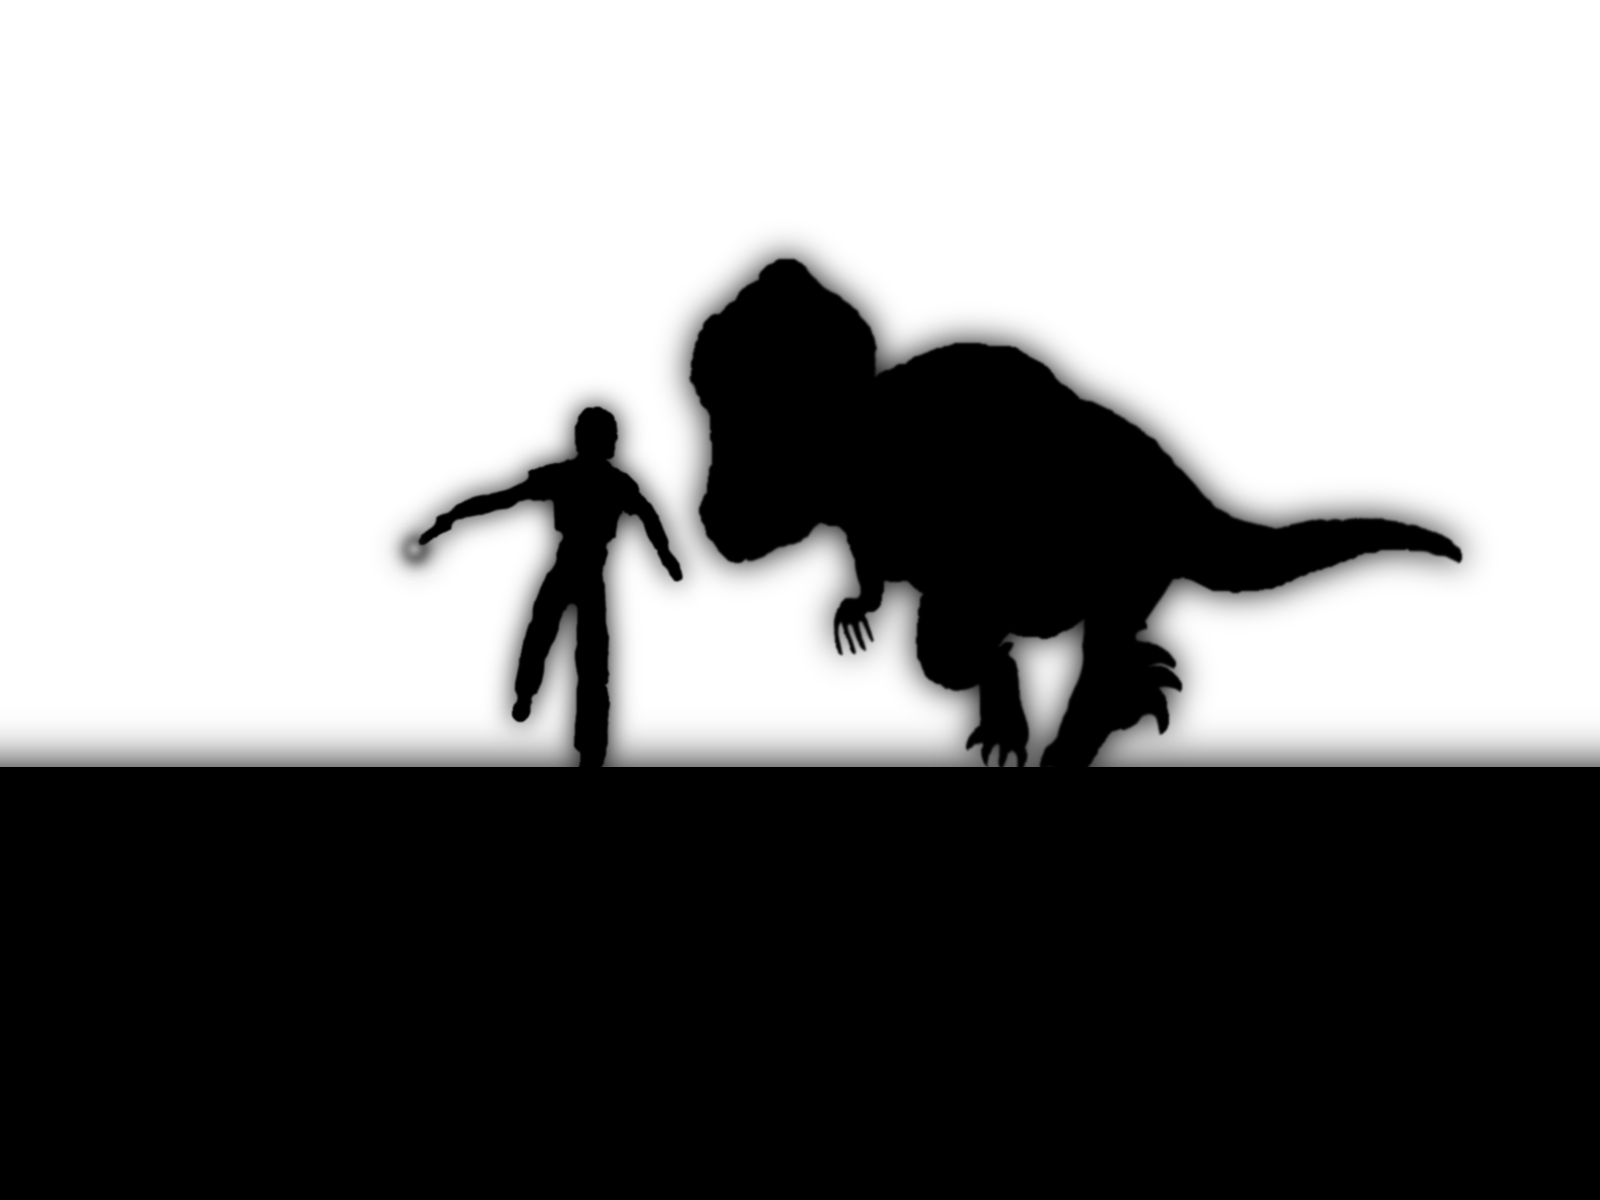 General 1600x1200 Jurassic Park Tyrannosaurus rex silhouette monochrome minimalism simple background artwork